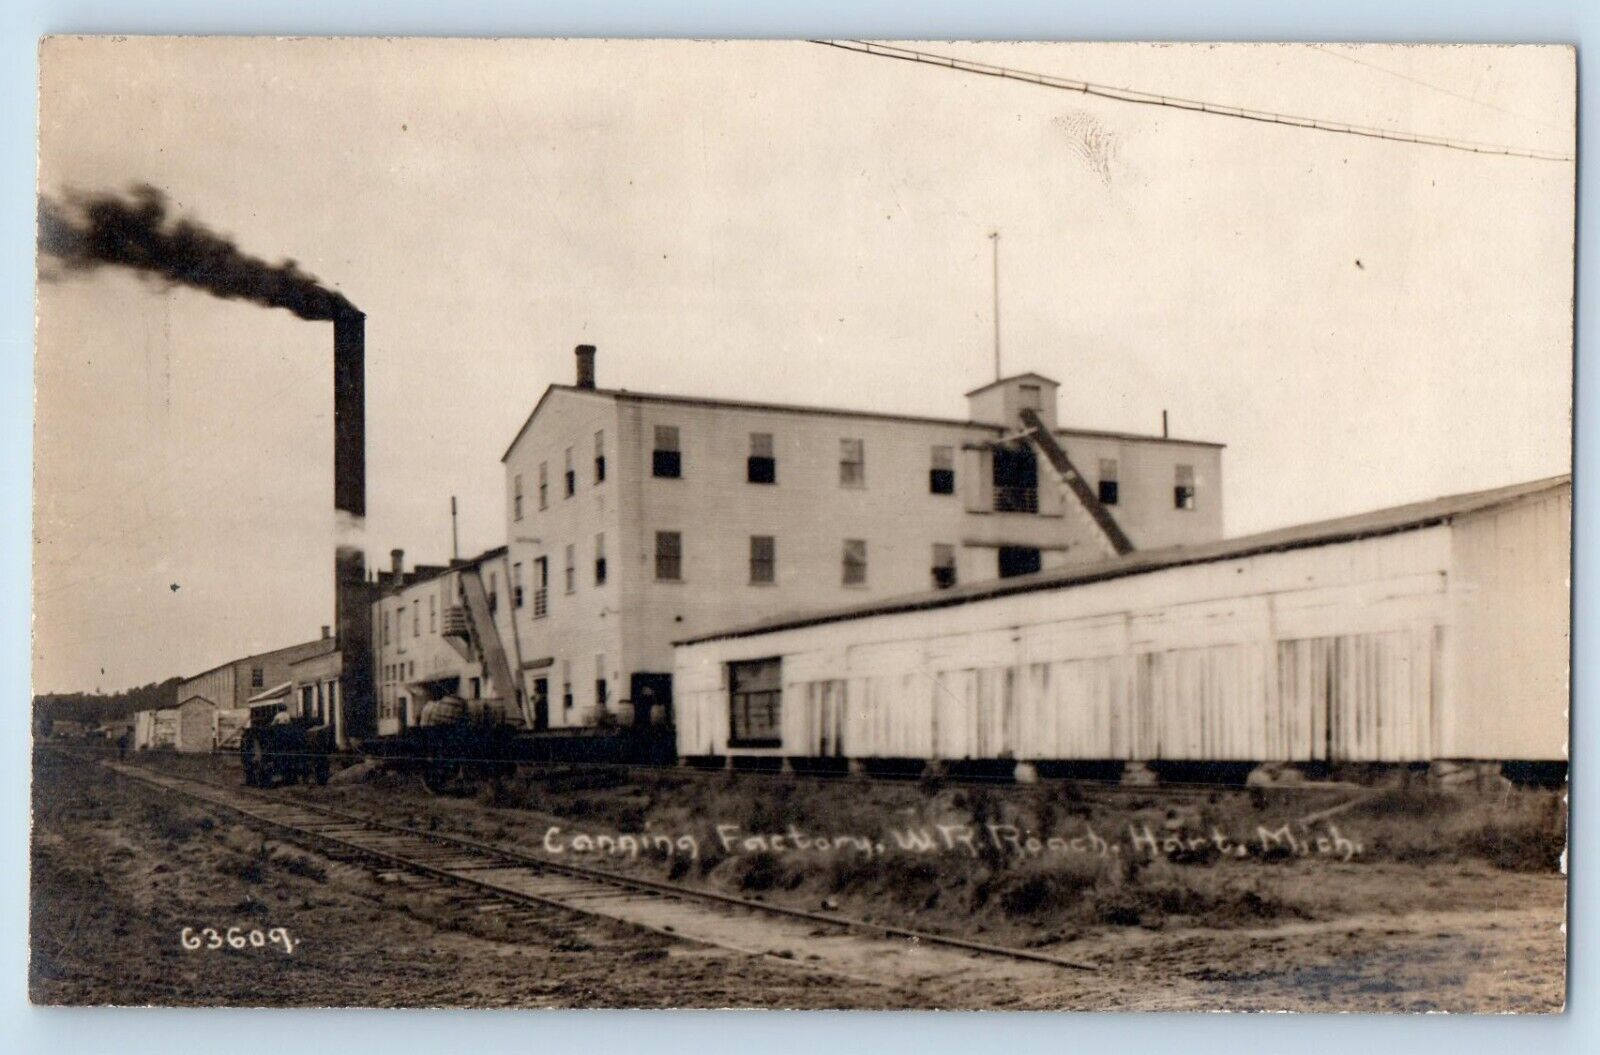 c1910 W.R. Roach Canning Factory View Hart Michigan MI RPPC Photo Postcard